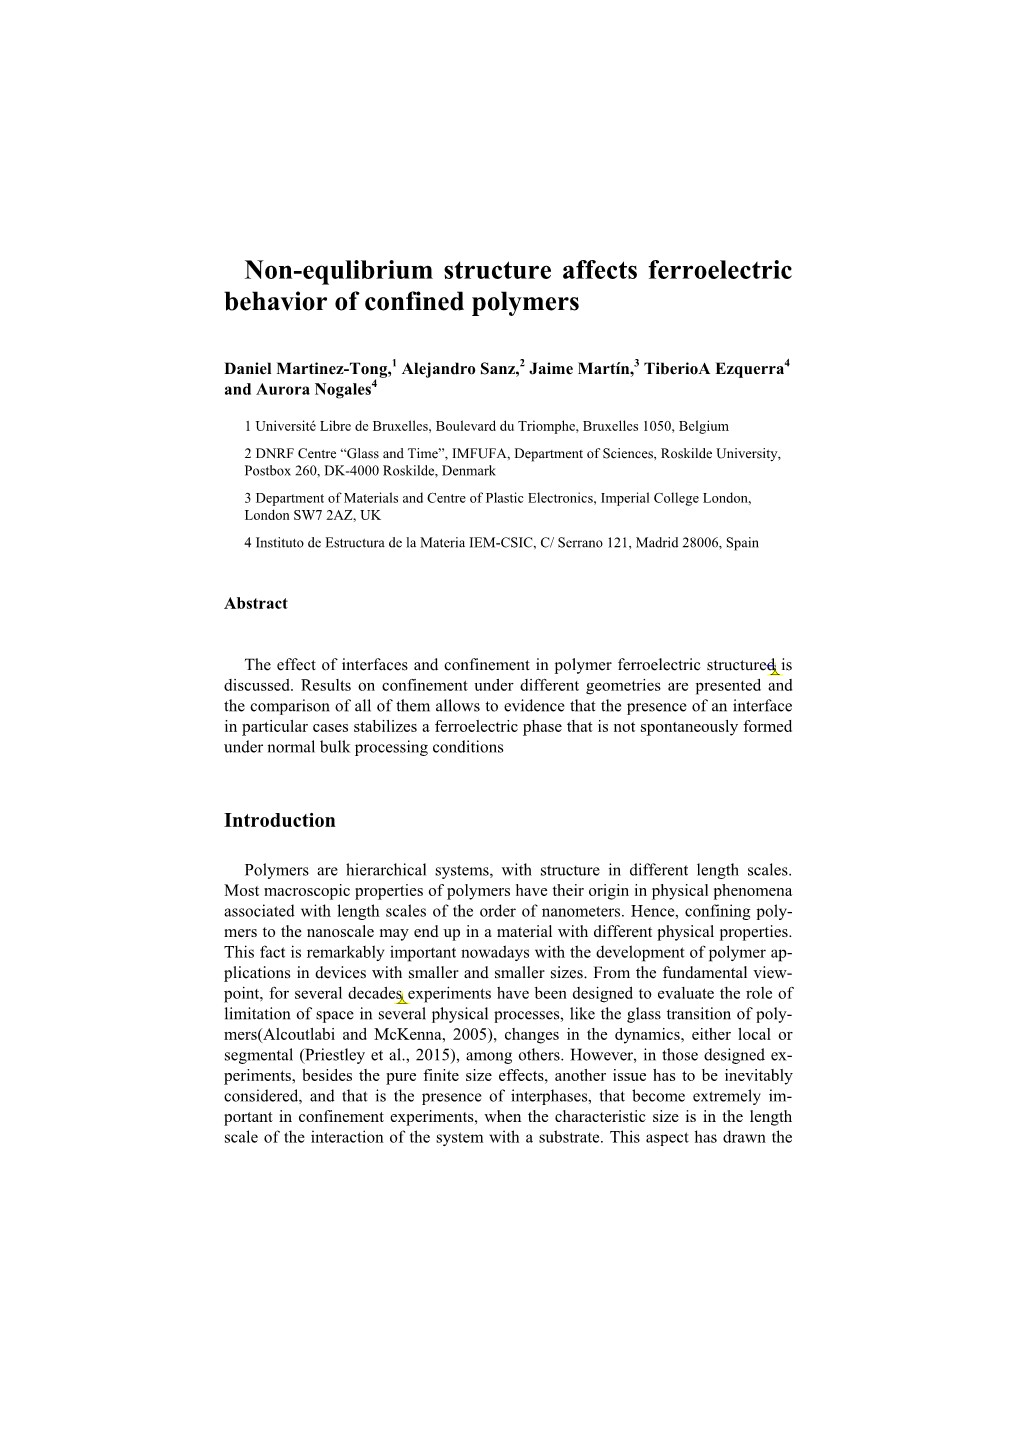 Non-Equlibrium Structure Affects Ferroelectric Behavior of Confined Polymers